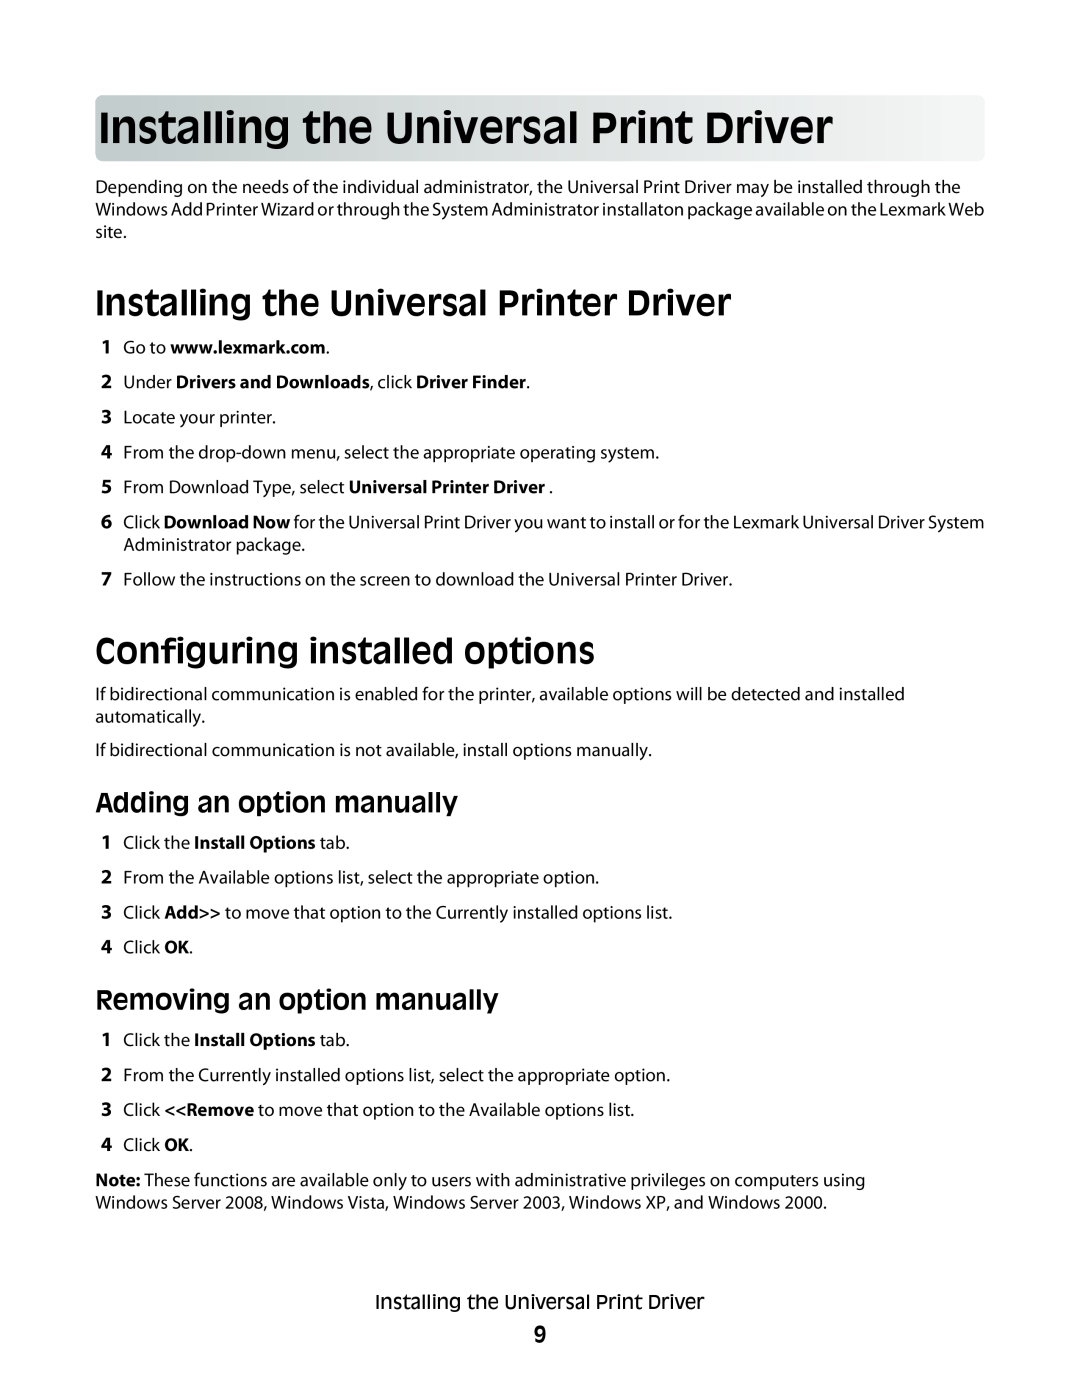 Lexmark Universal Driver manual Installingthe UniversalPrintDriver, Installing the Universal Printer Driver 